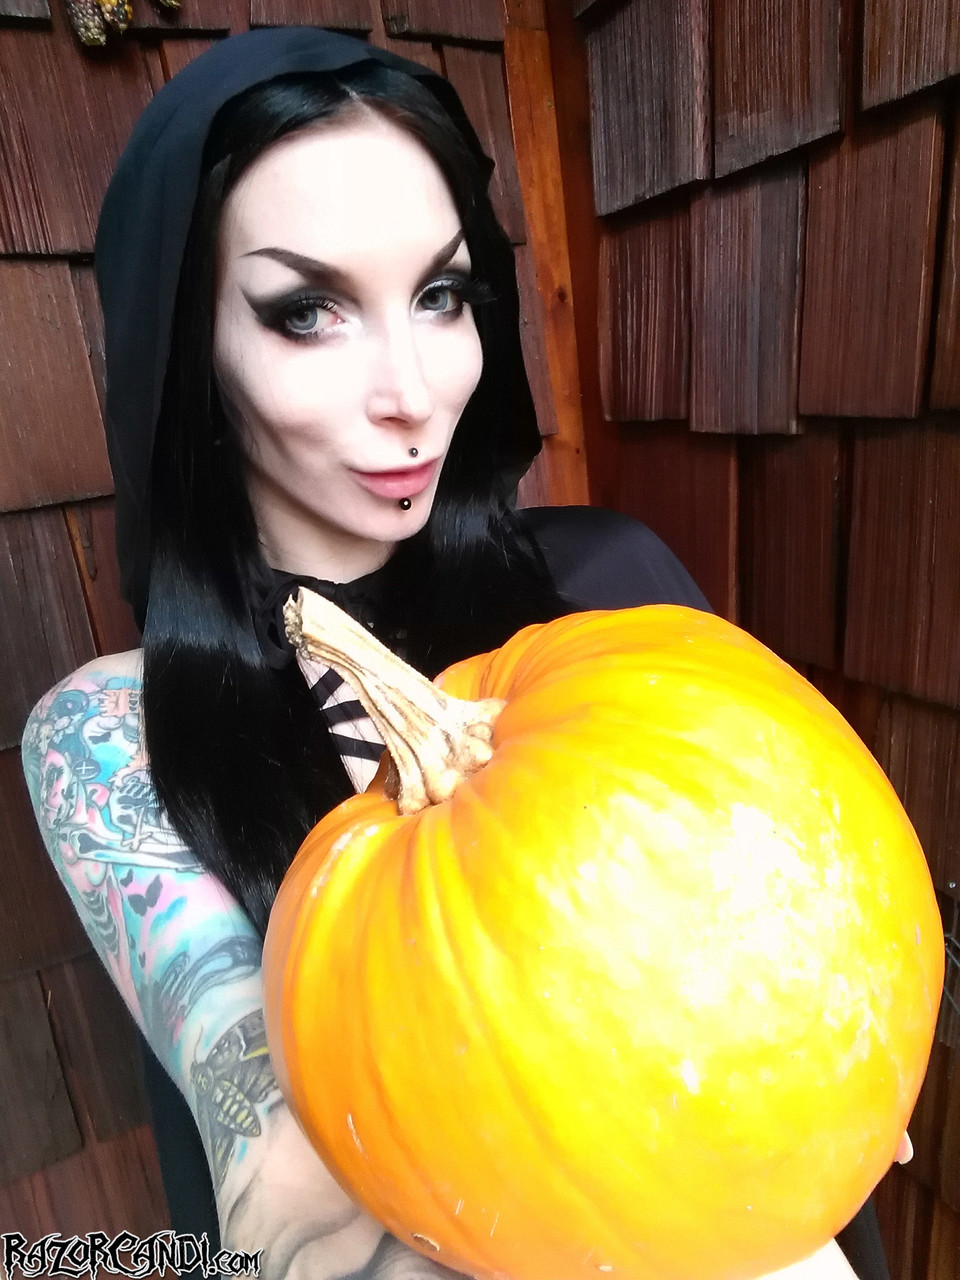 Goth girl Razor Candi flaunts her big ass over a pumpkin in Halloween attire Porno-Foto #427655339 | Razor Candi Pics, Razor Candi, MILF, Mobiler Porno